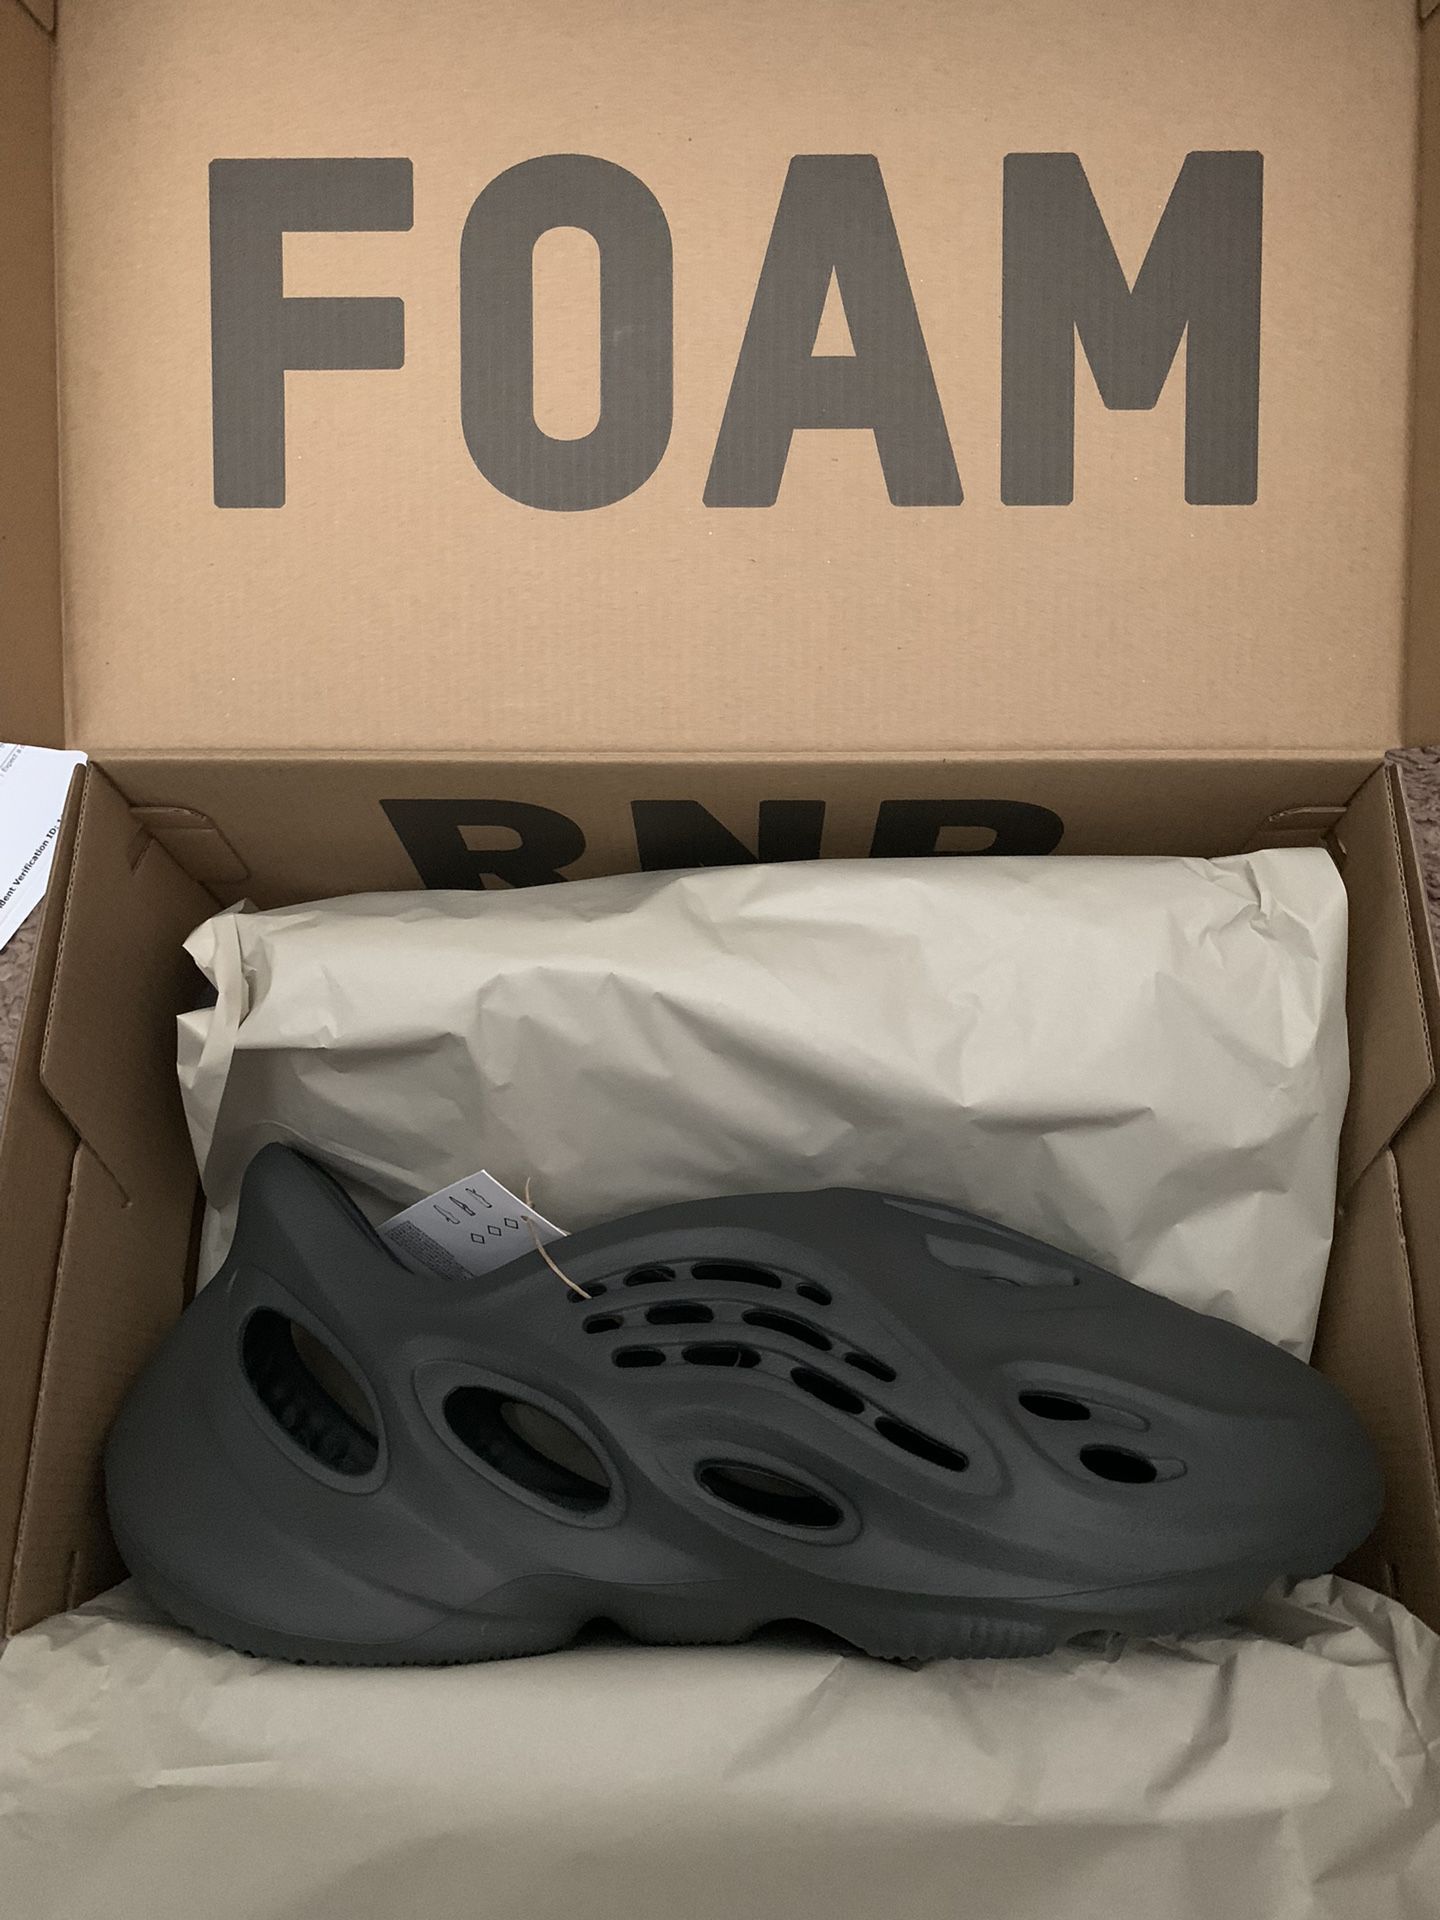 adidas Yeezy Foam RNR Carbon Men's - IG5349 - US